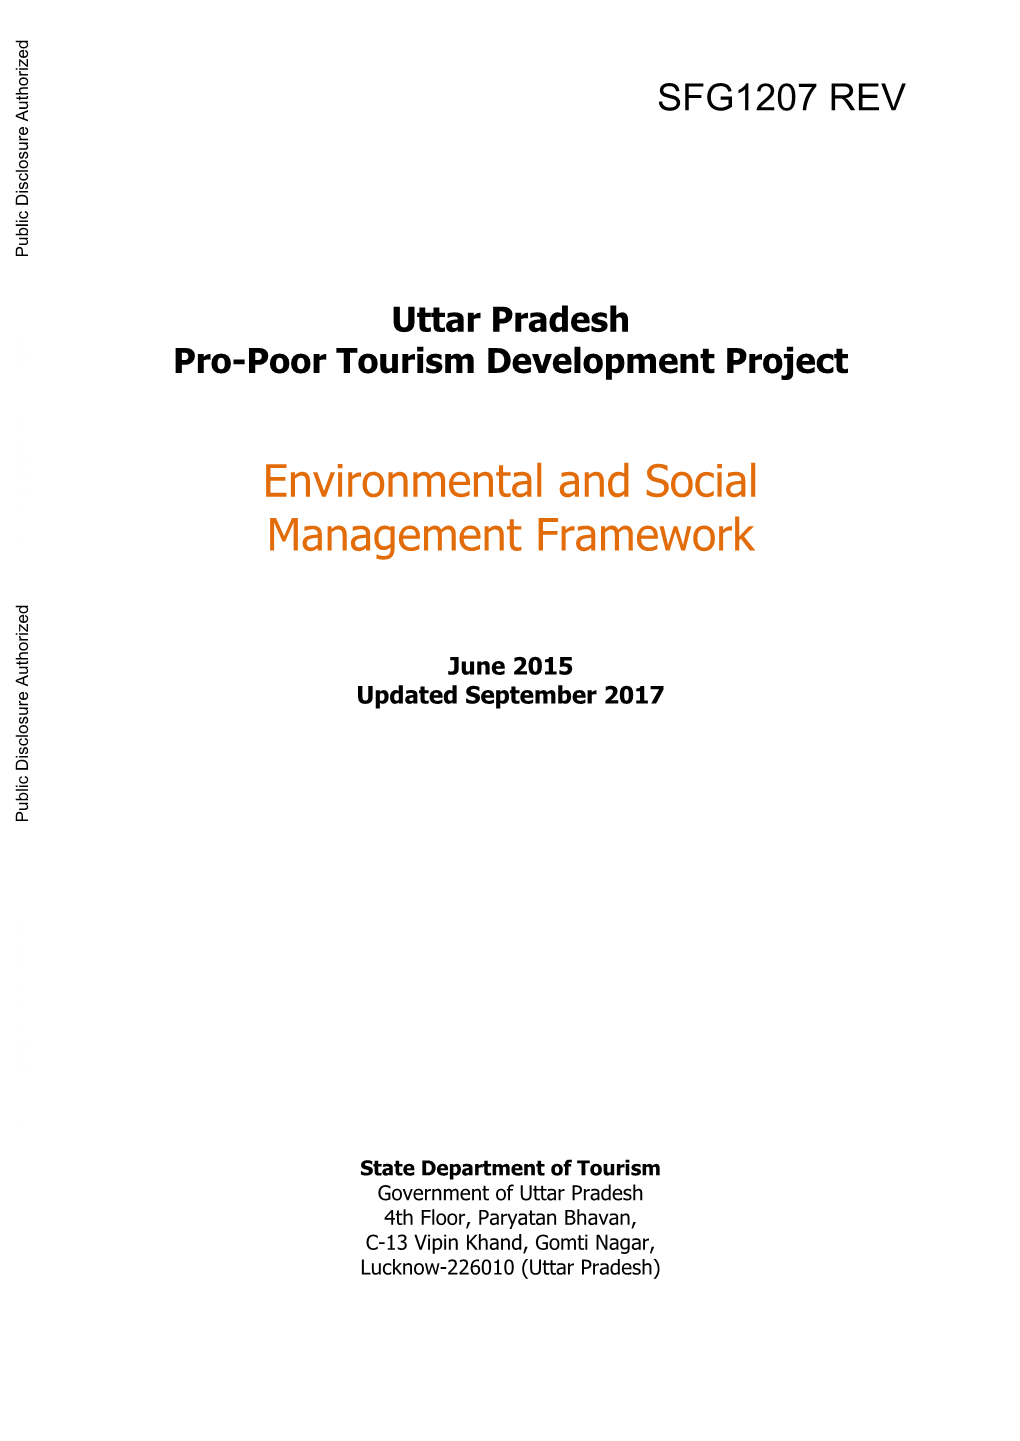 Uttar Pradesh Pro-Poor Tourism Development Project